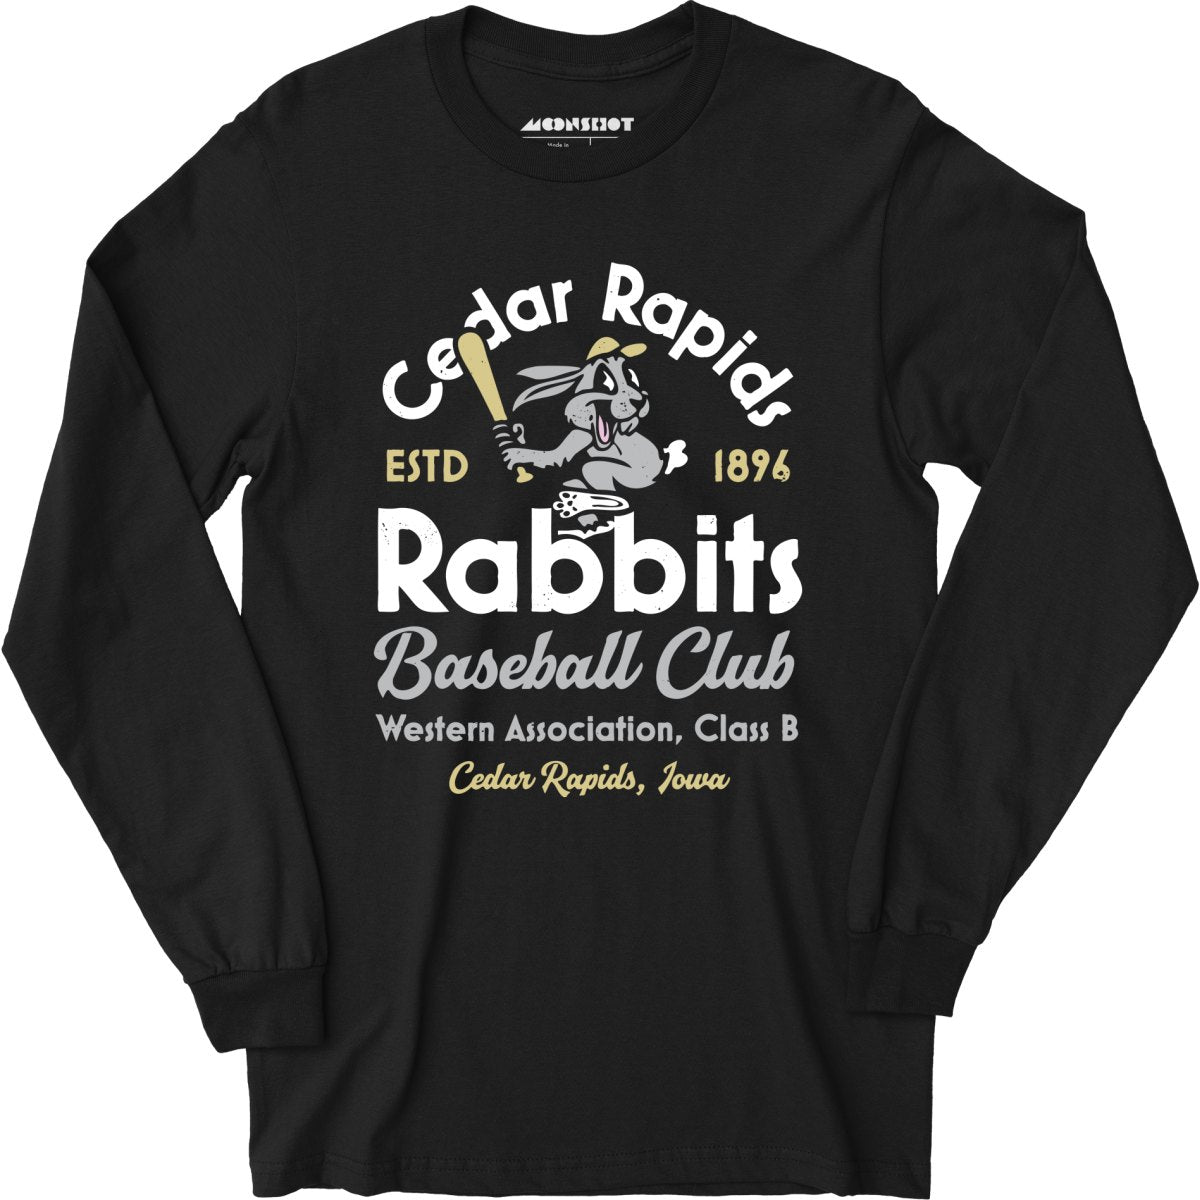 Cedar Rapids Rabbits - Iowa - Vintage Defunct Baseball Teams - Long Sleeve T-Shirt